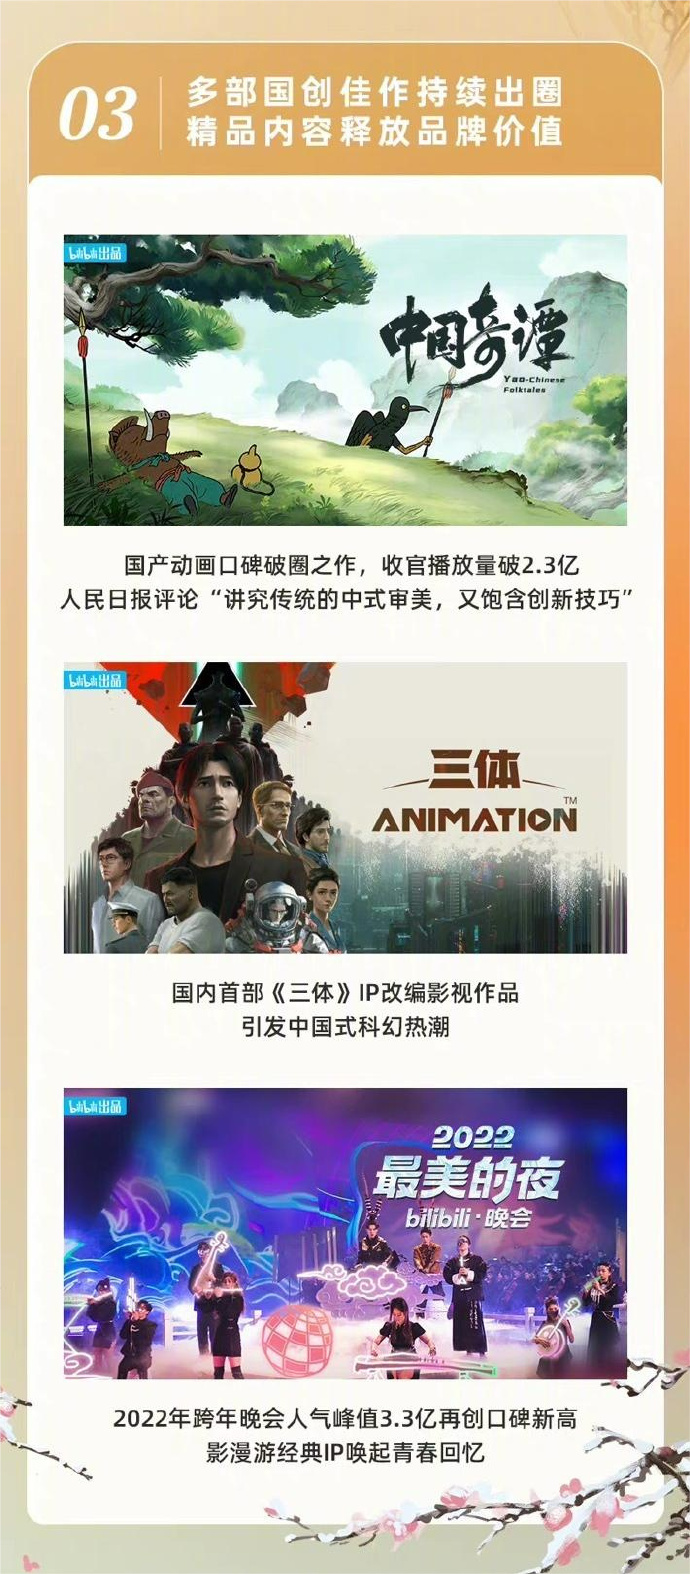 B站称三体动画引中国式科幻热潮